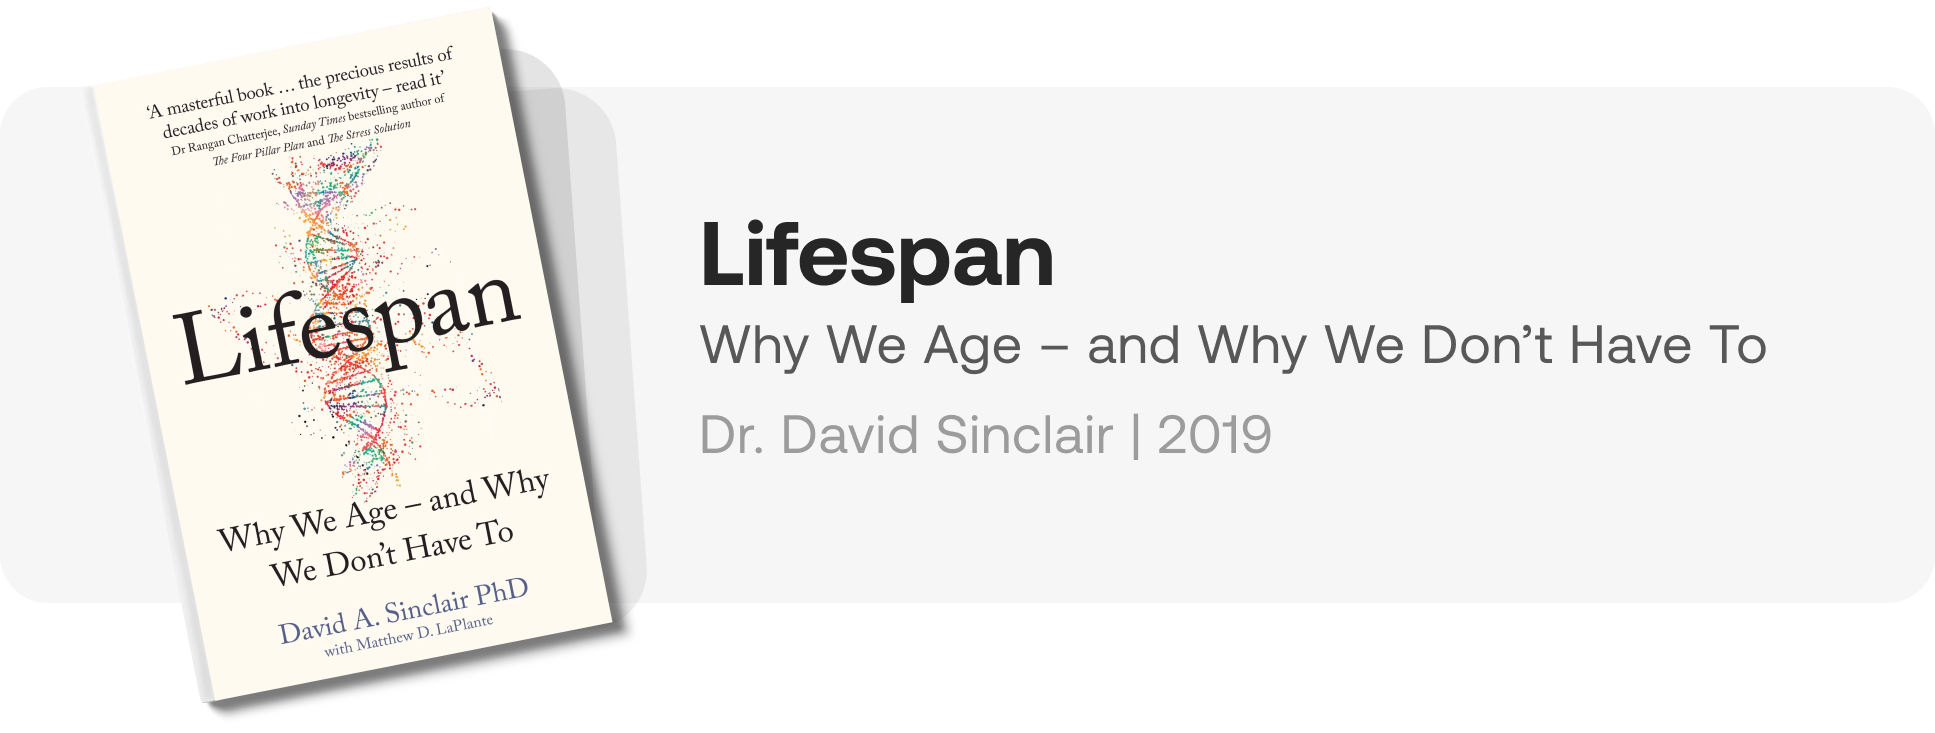 lifespan book cover dr david sinclair